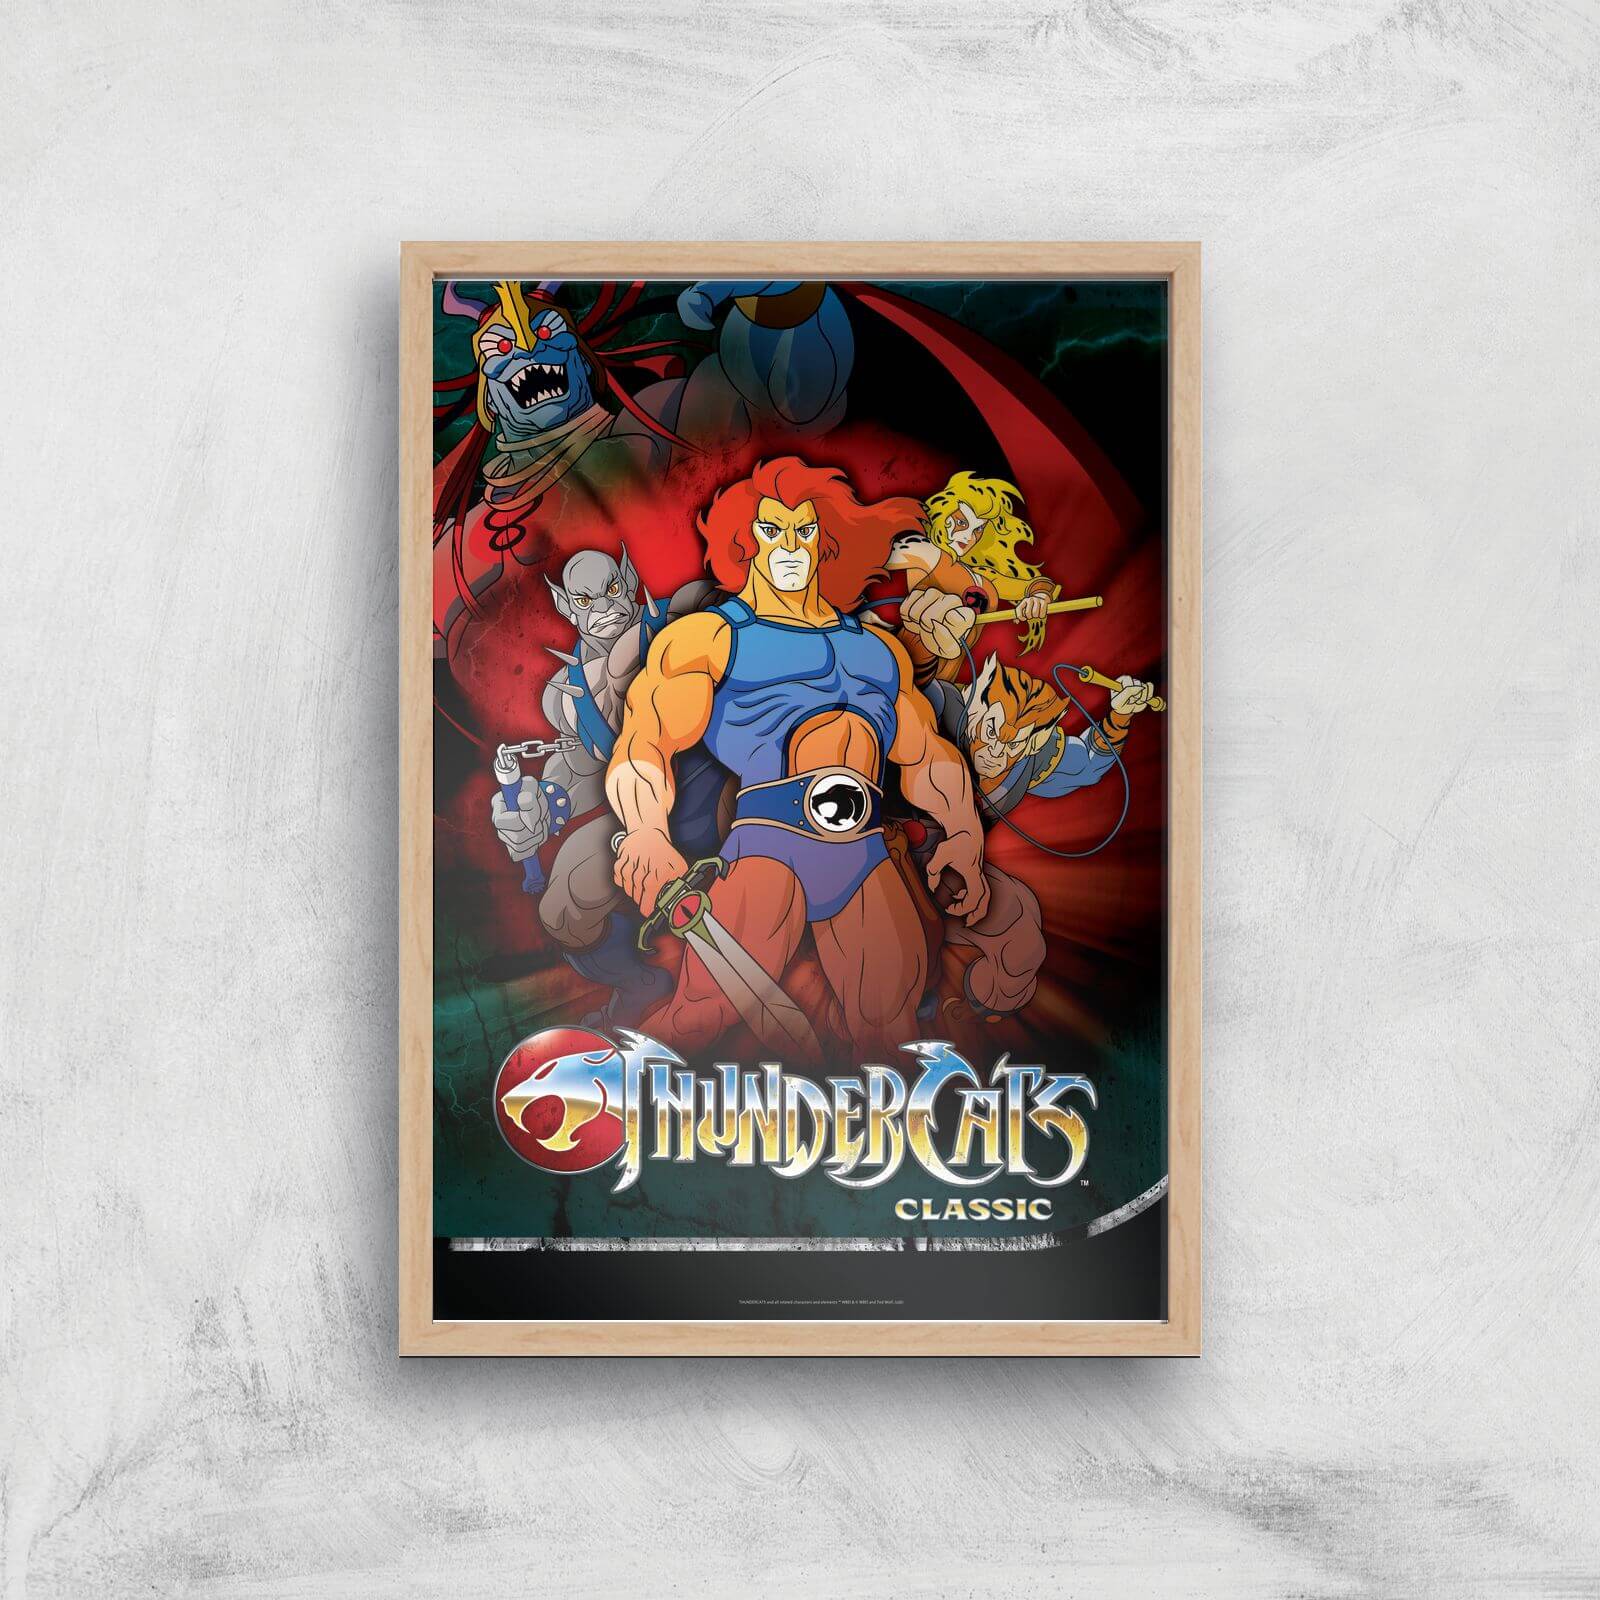 Thundercats Giclee Art Print - A2 - Wooden Frame